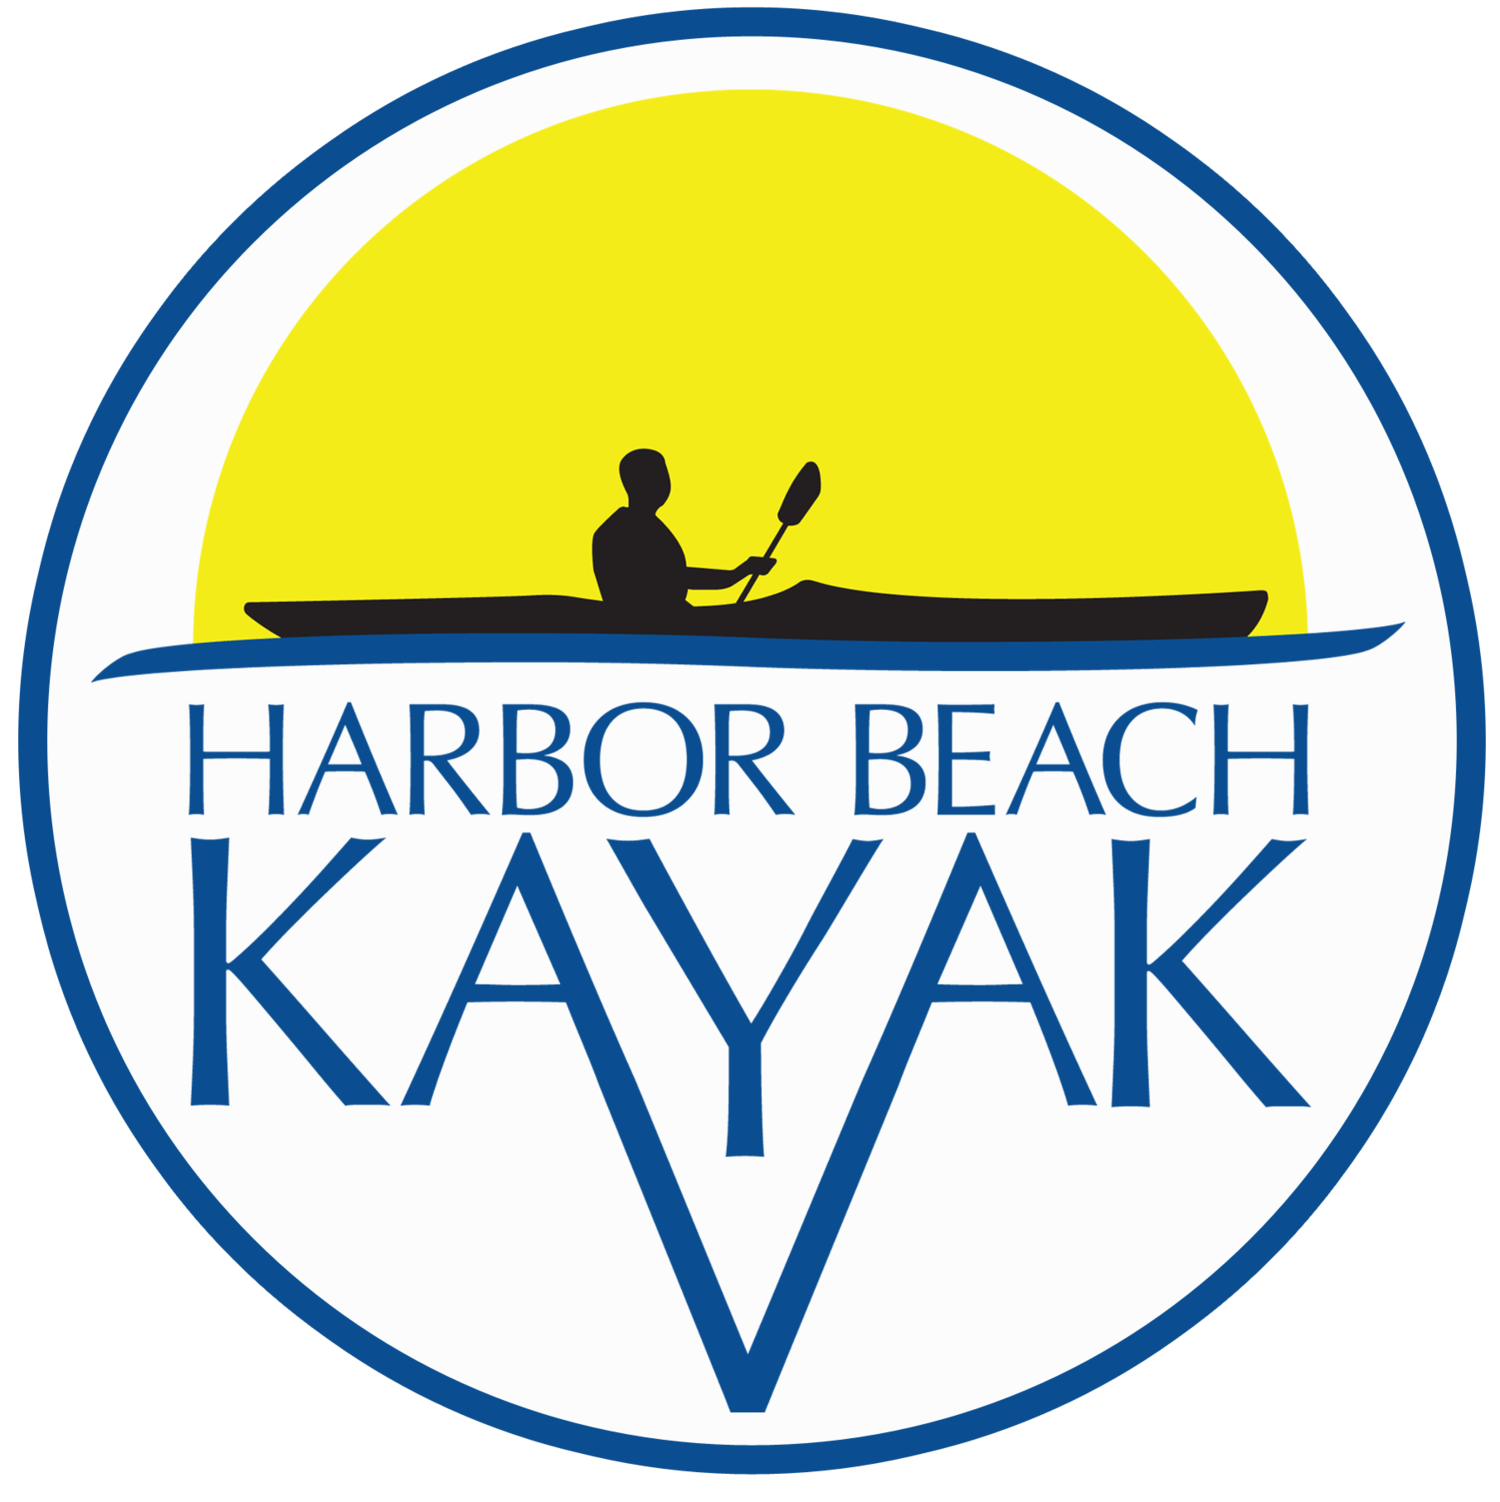 Kayak Logo - Harbor Beach Kayak